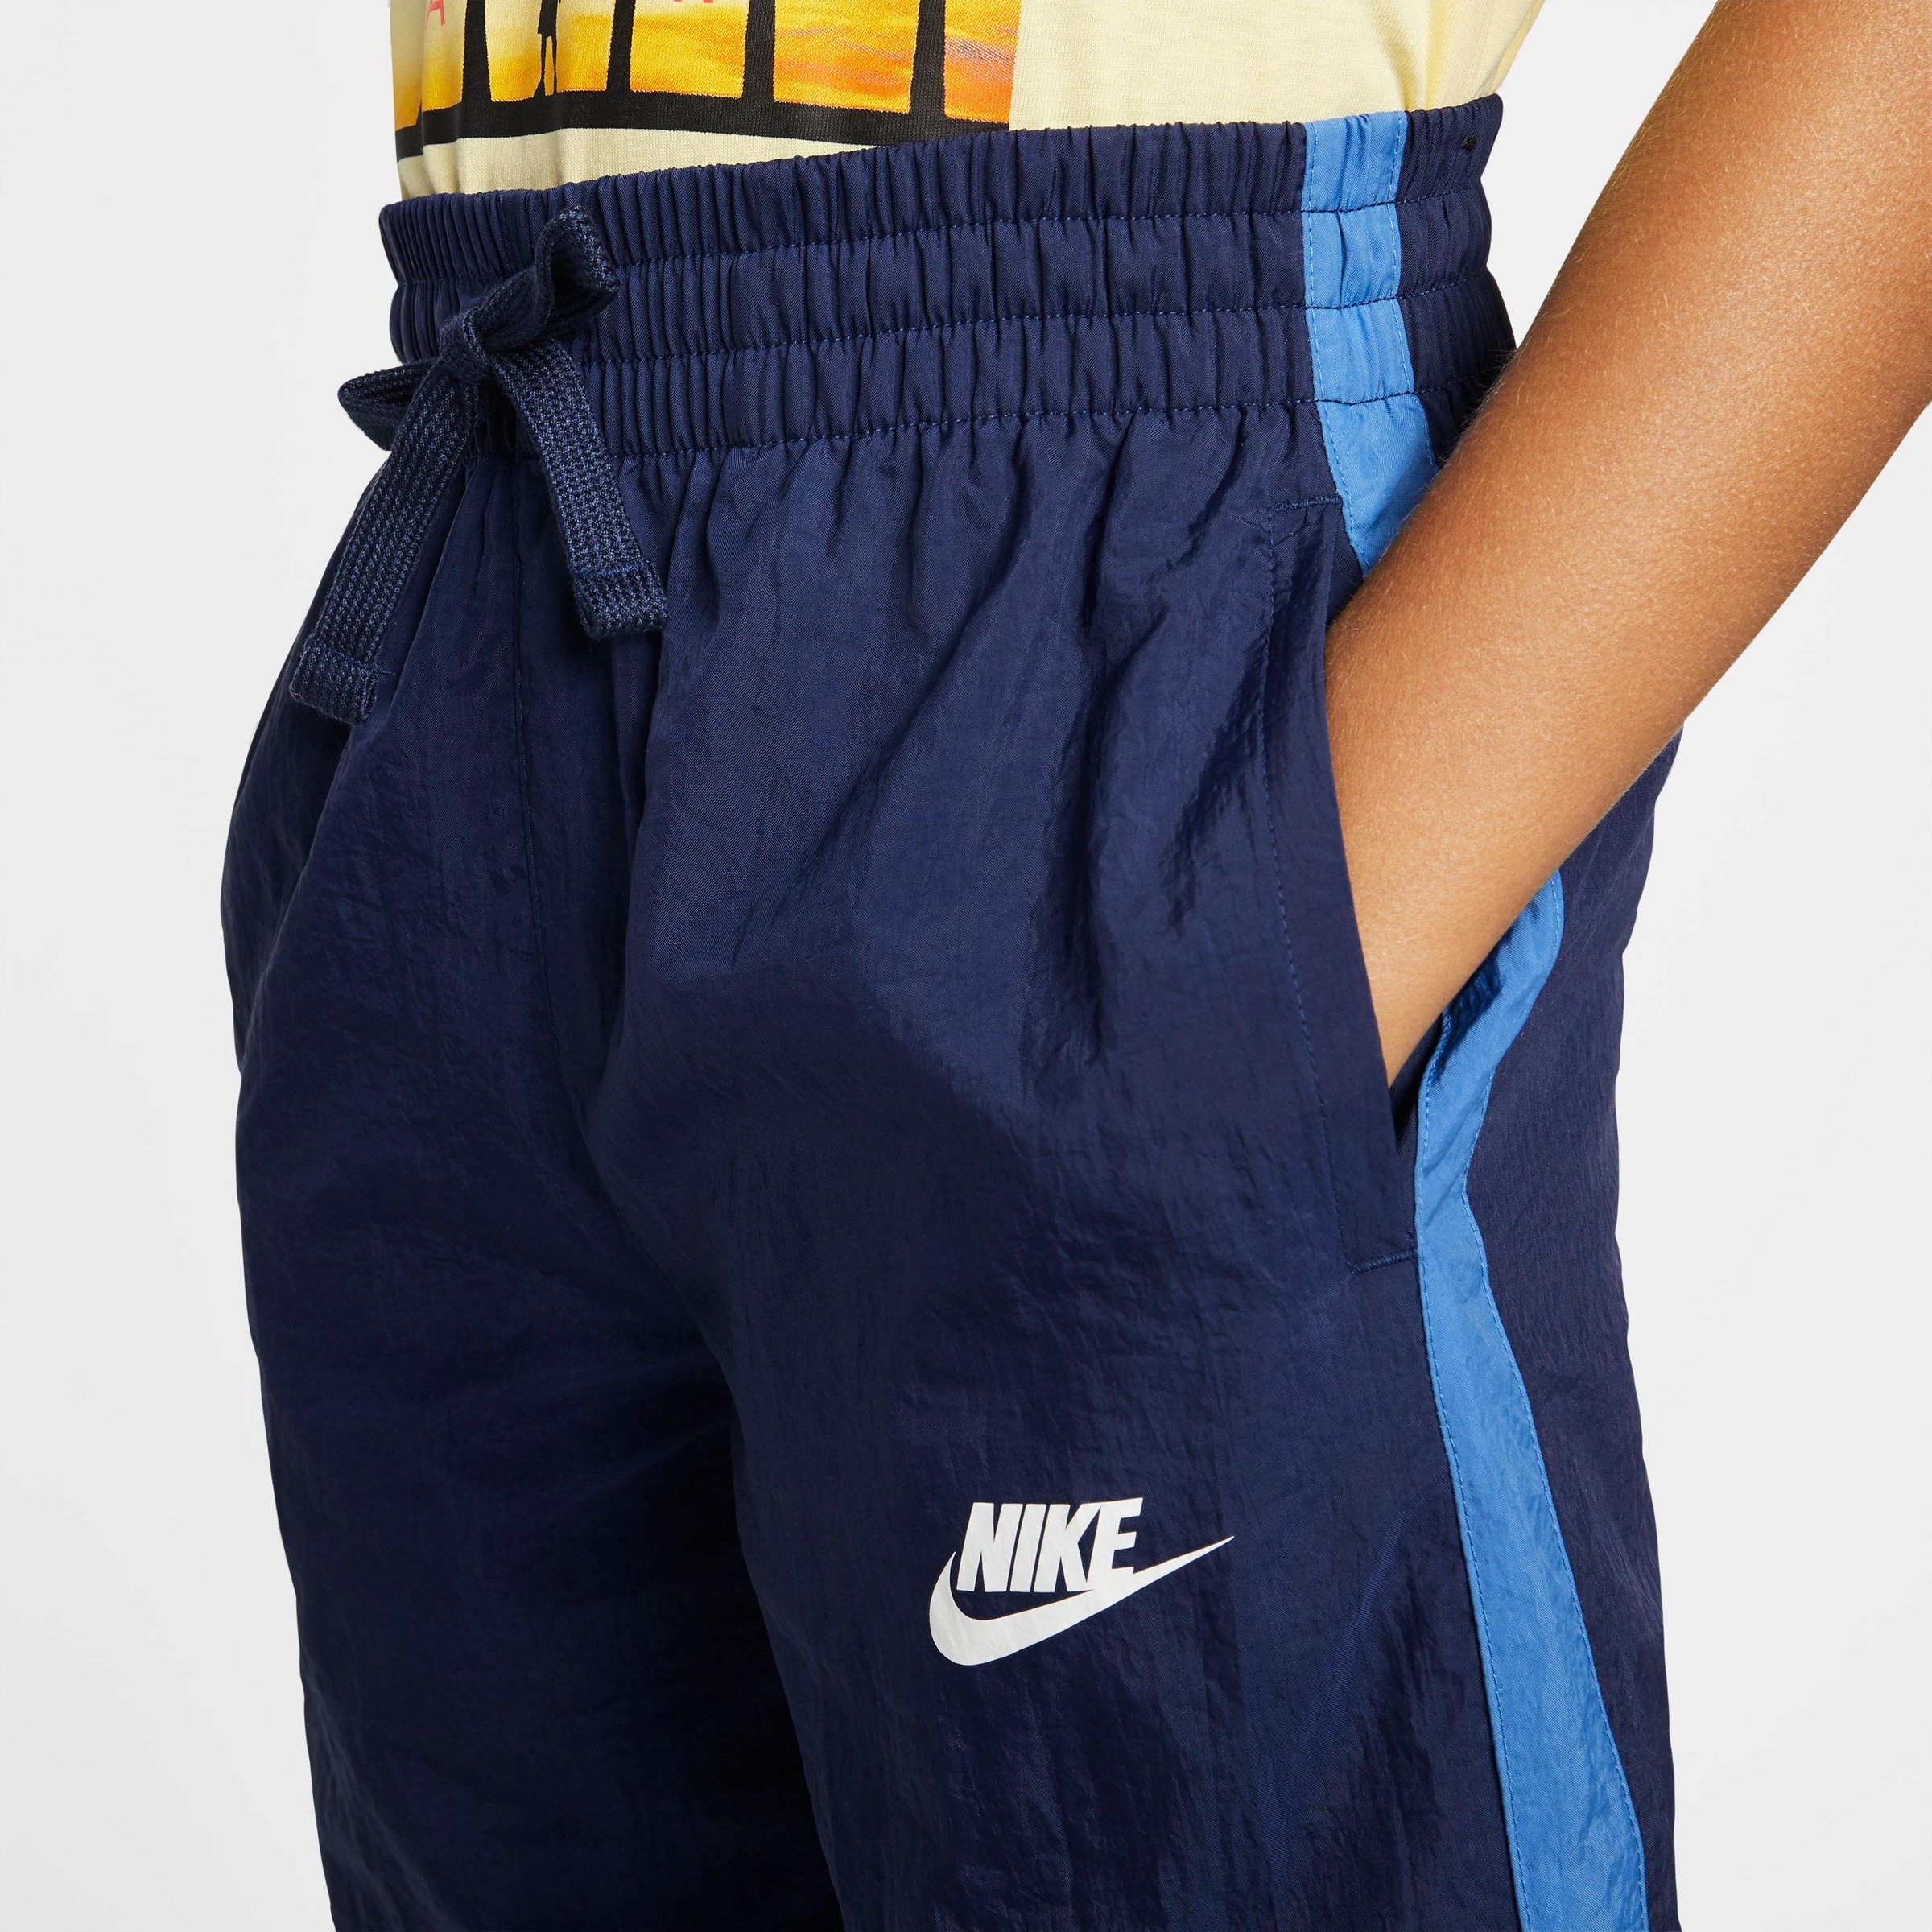 Nike Sportswear »Boys\' bei Tracksuit« Trainingsanzug Woven